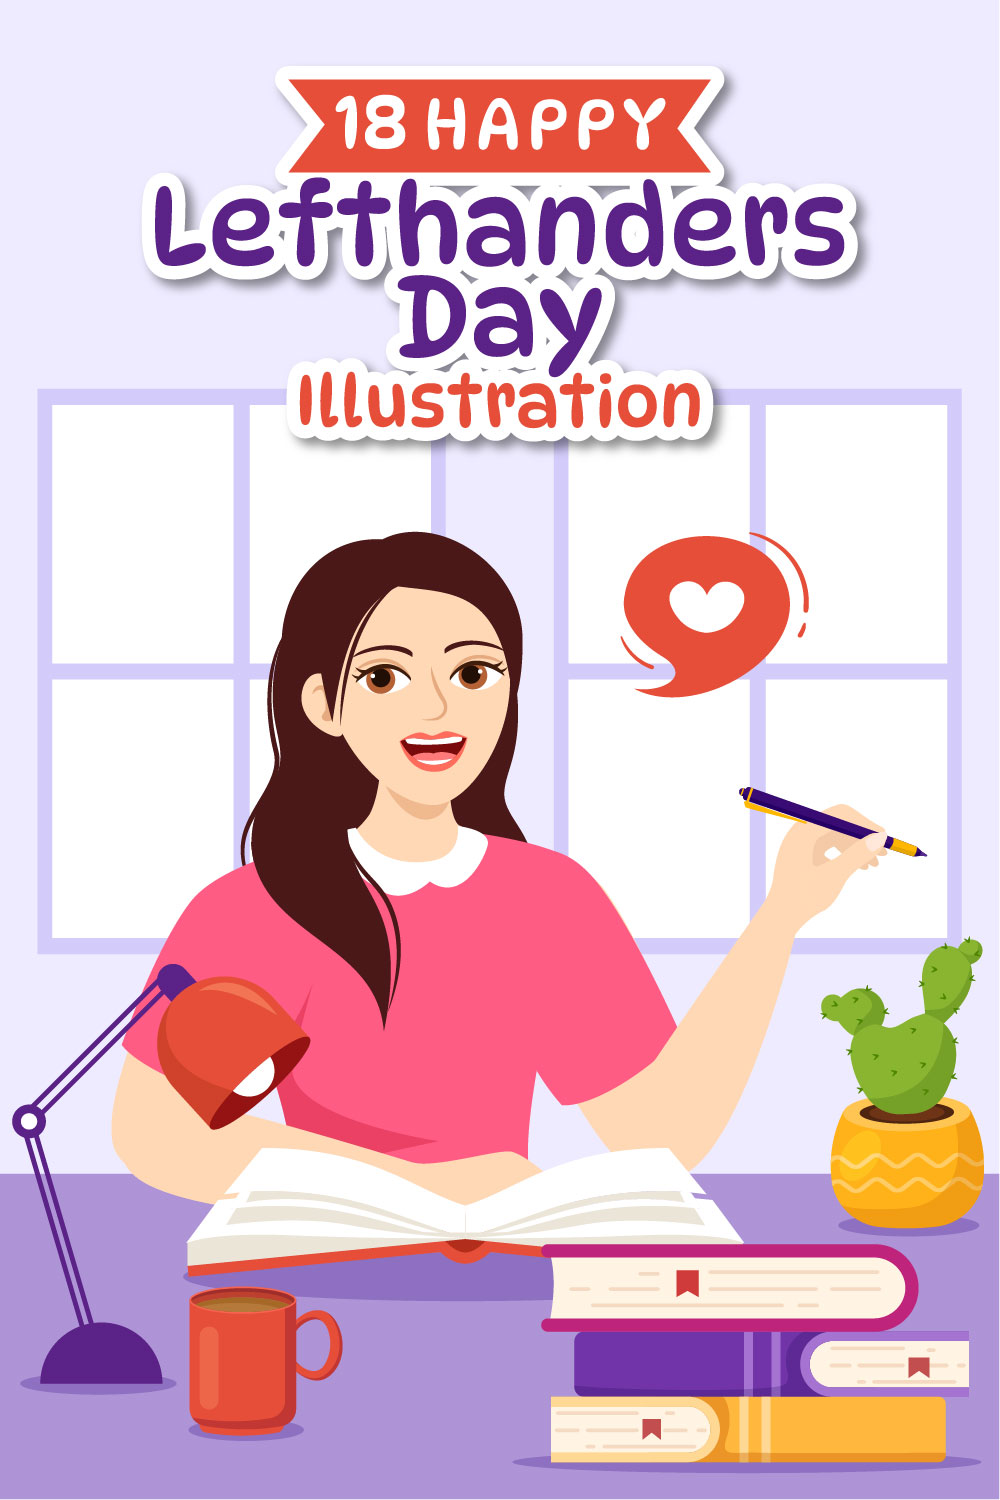 18 Happy Left Handers Day Illustration pinterest preview image.